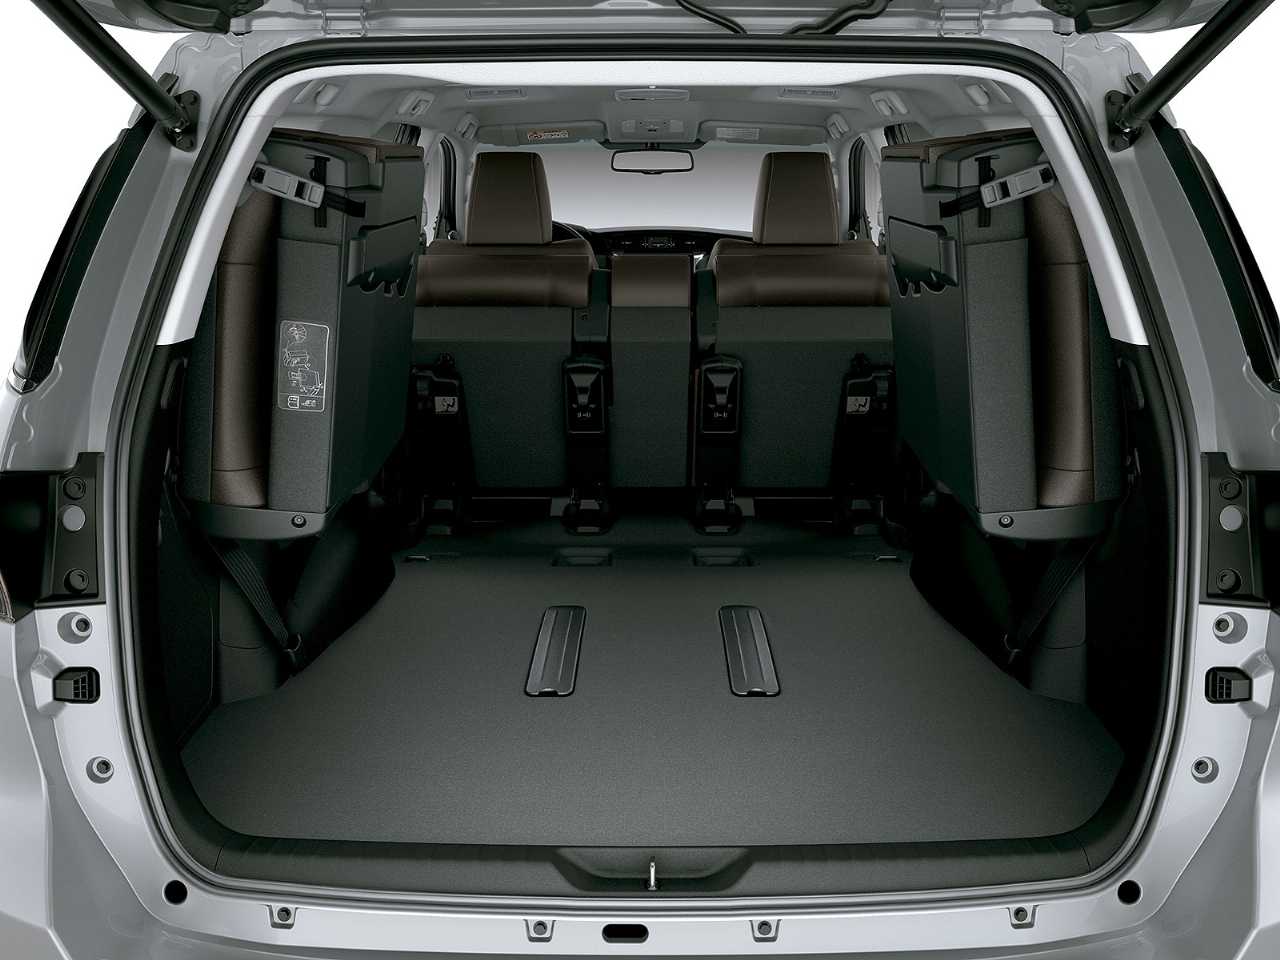 ToyotaSW4 2020 - porta-malas